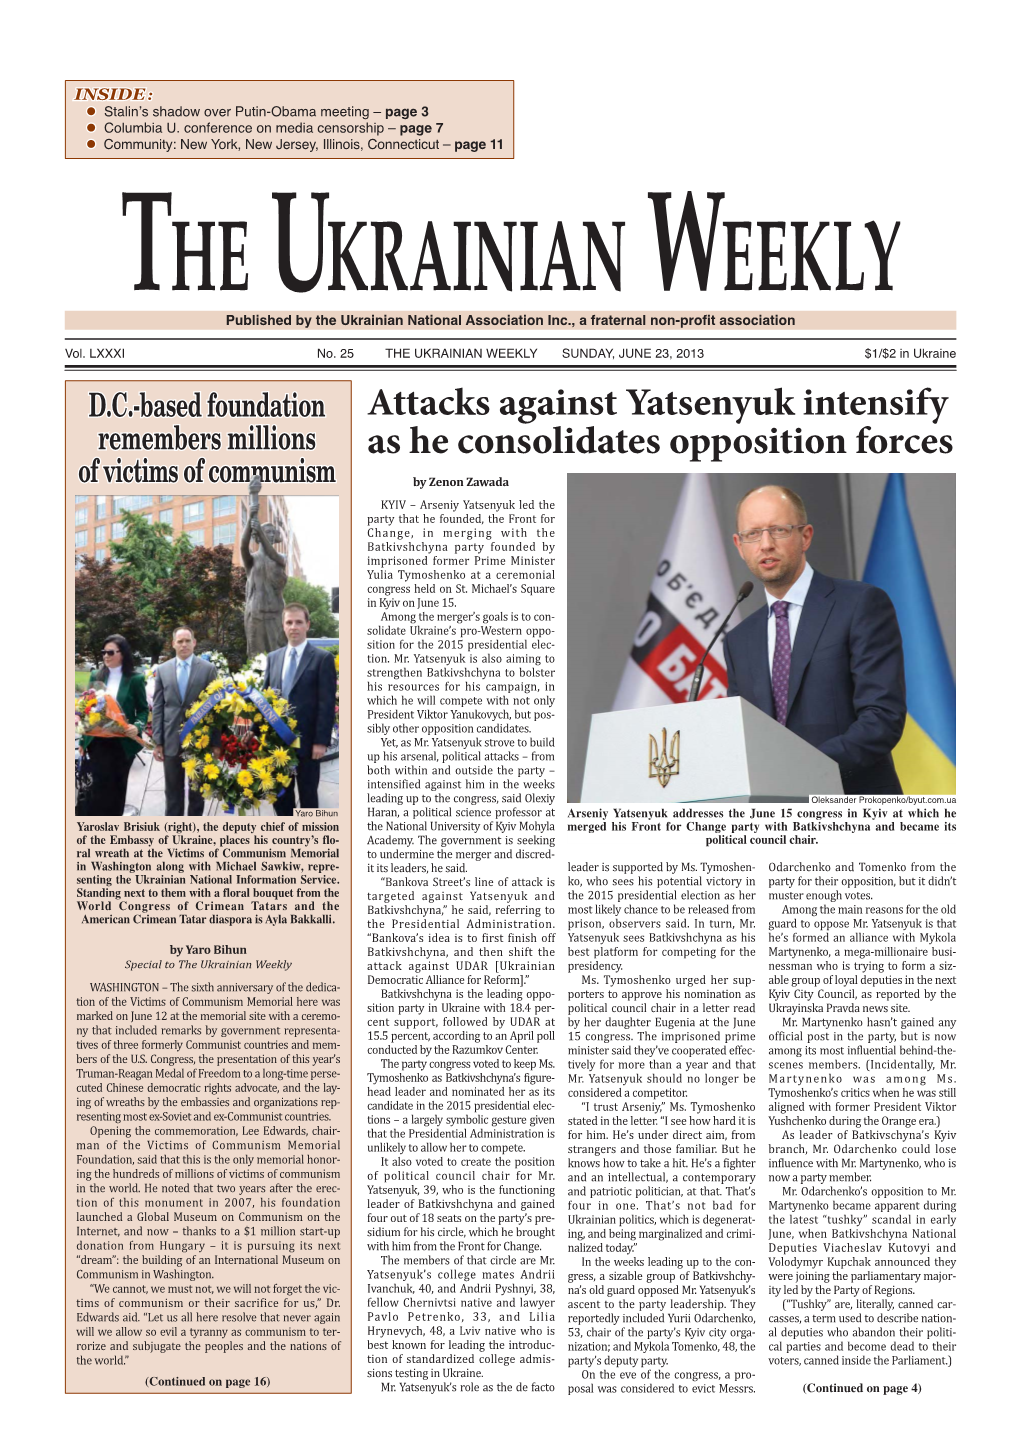 The Ukrainian Weekly 2013, No.25